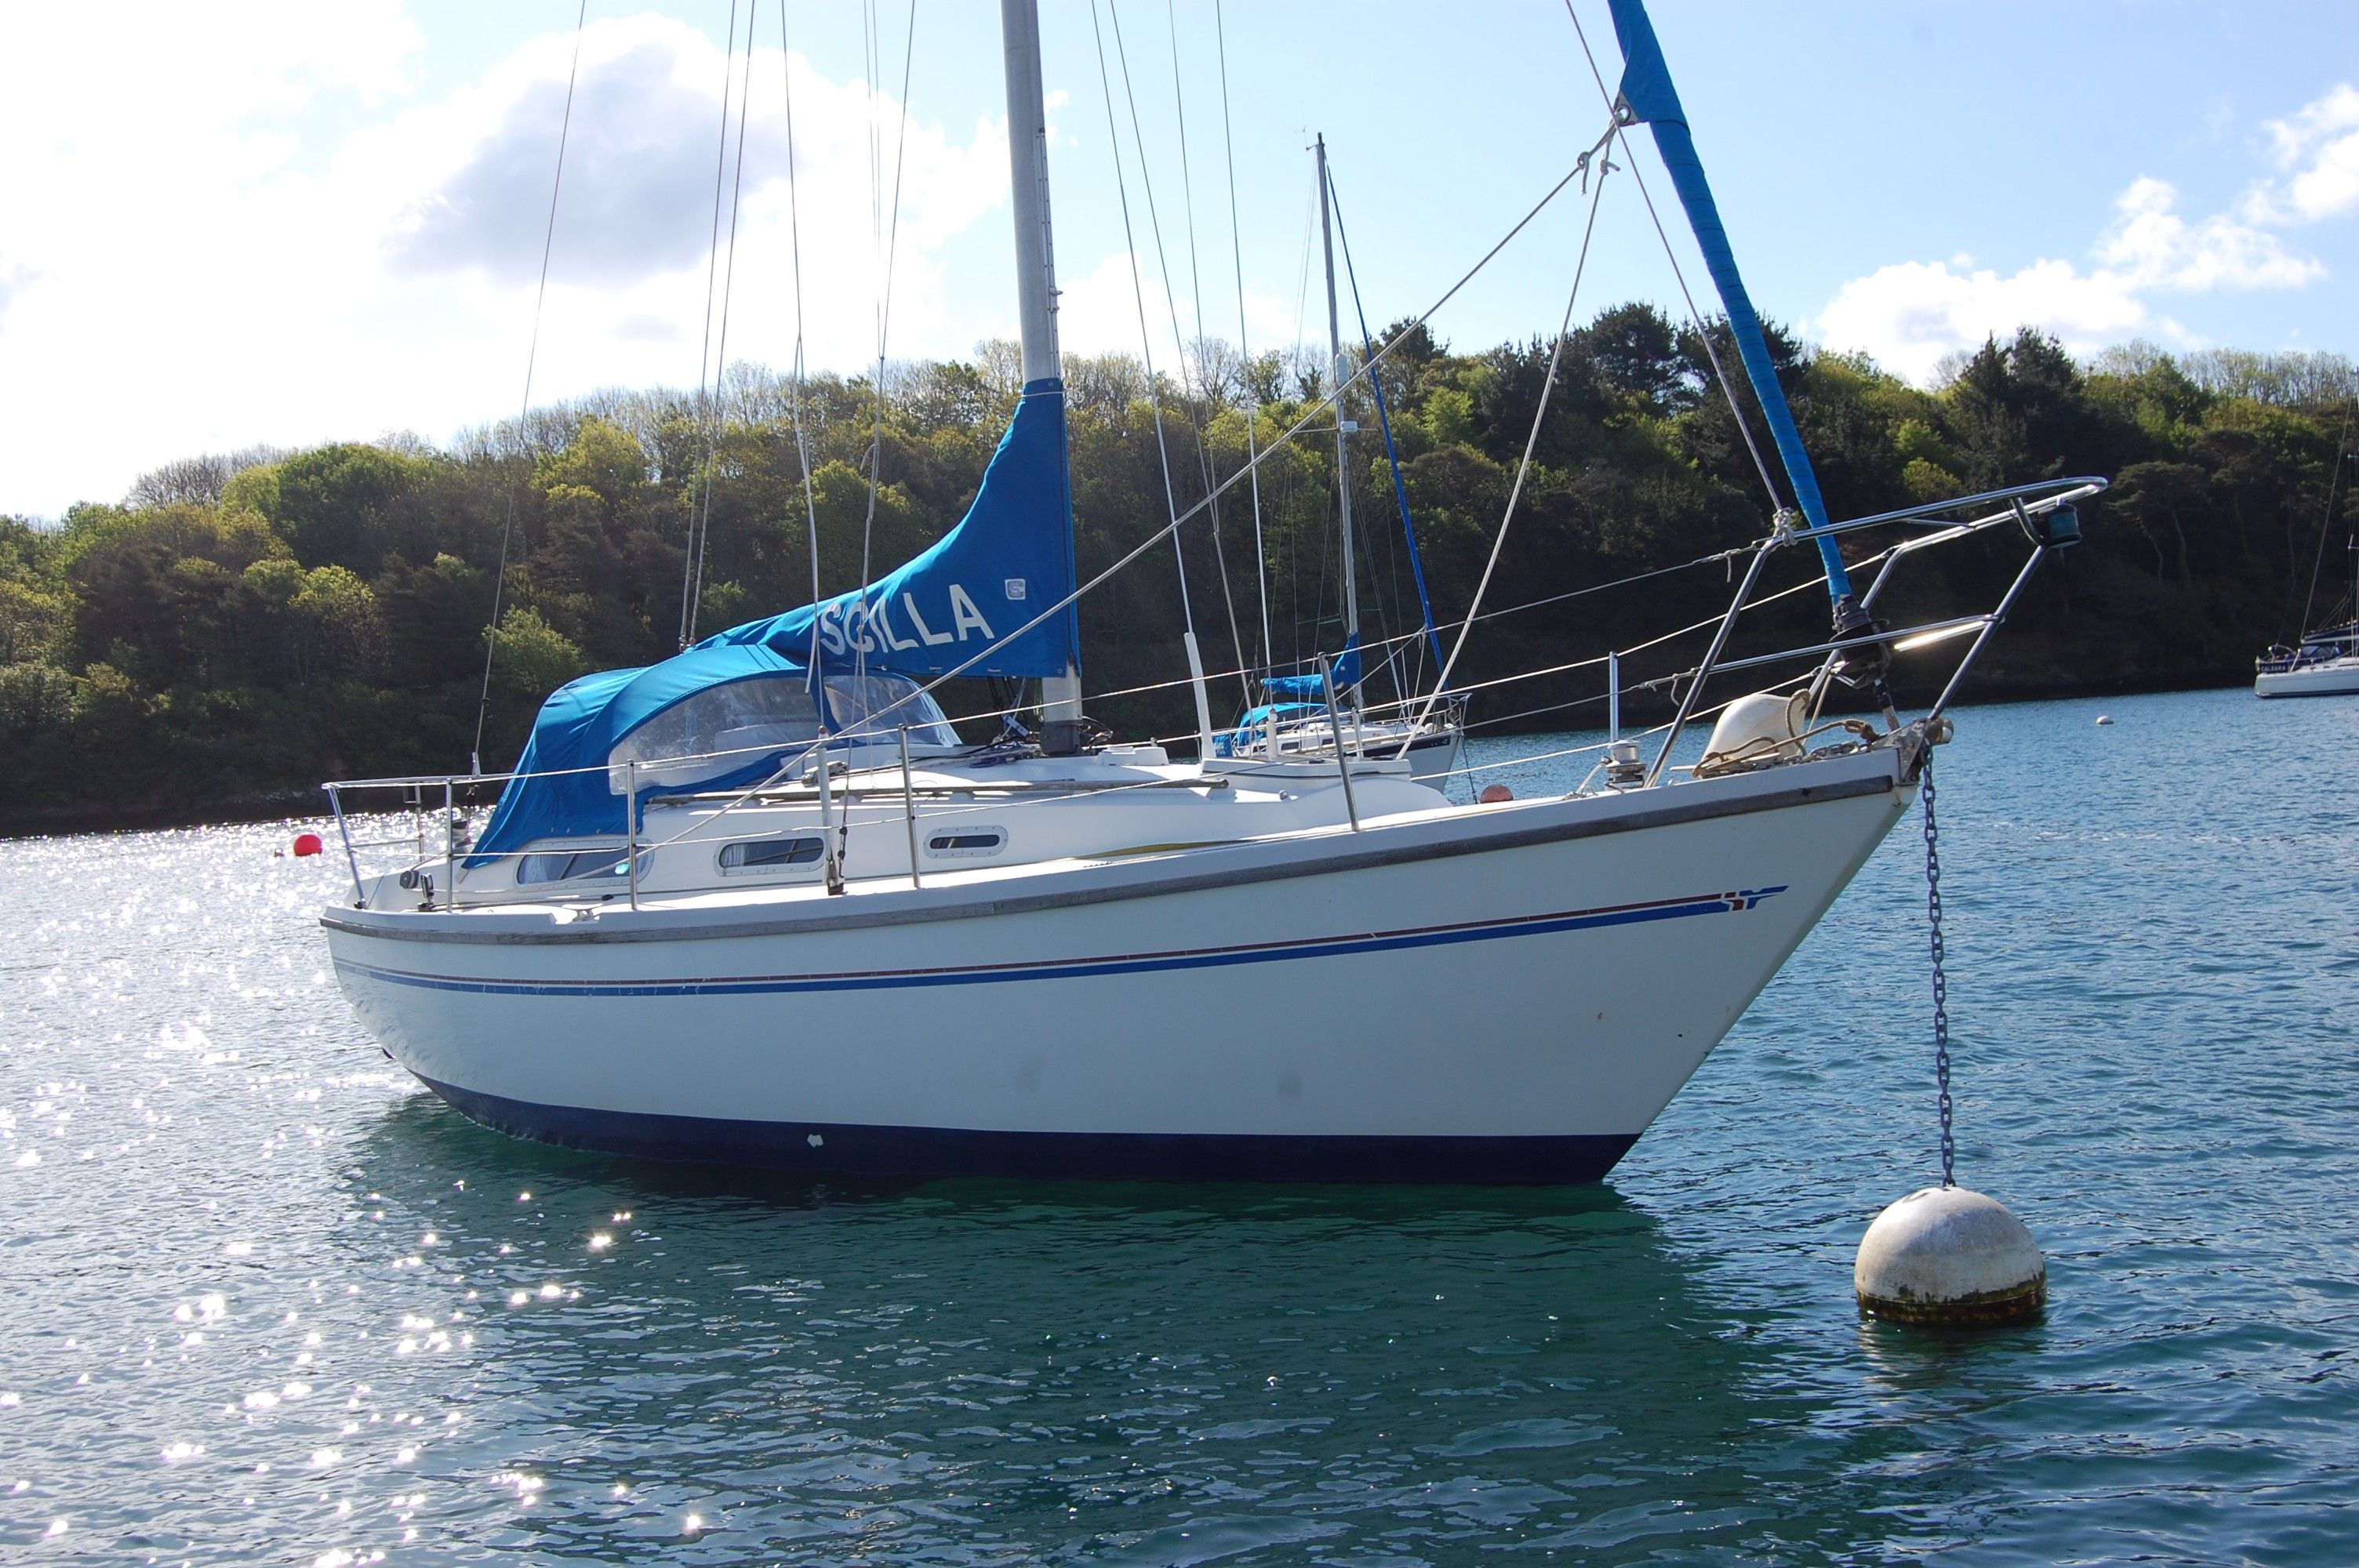 sadler 29 yacht for sale